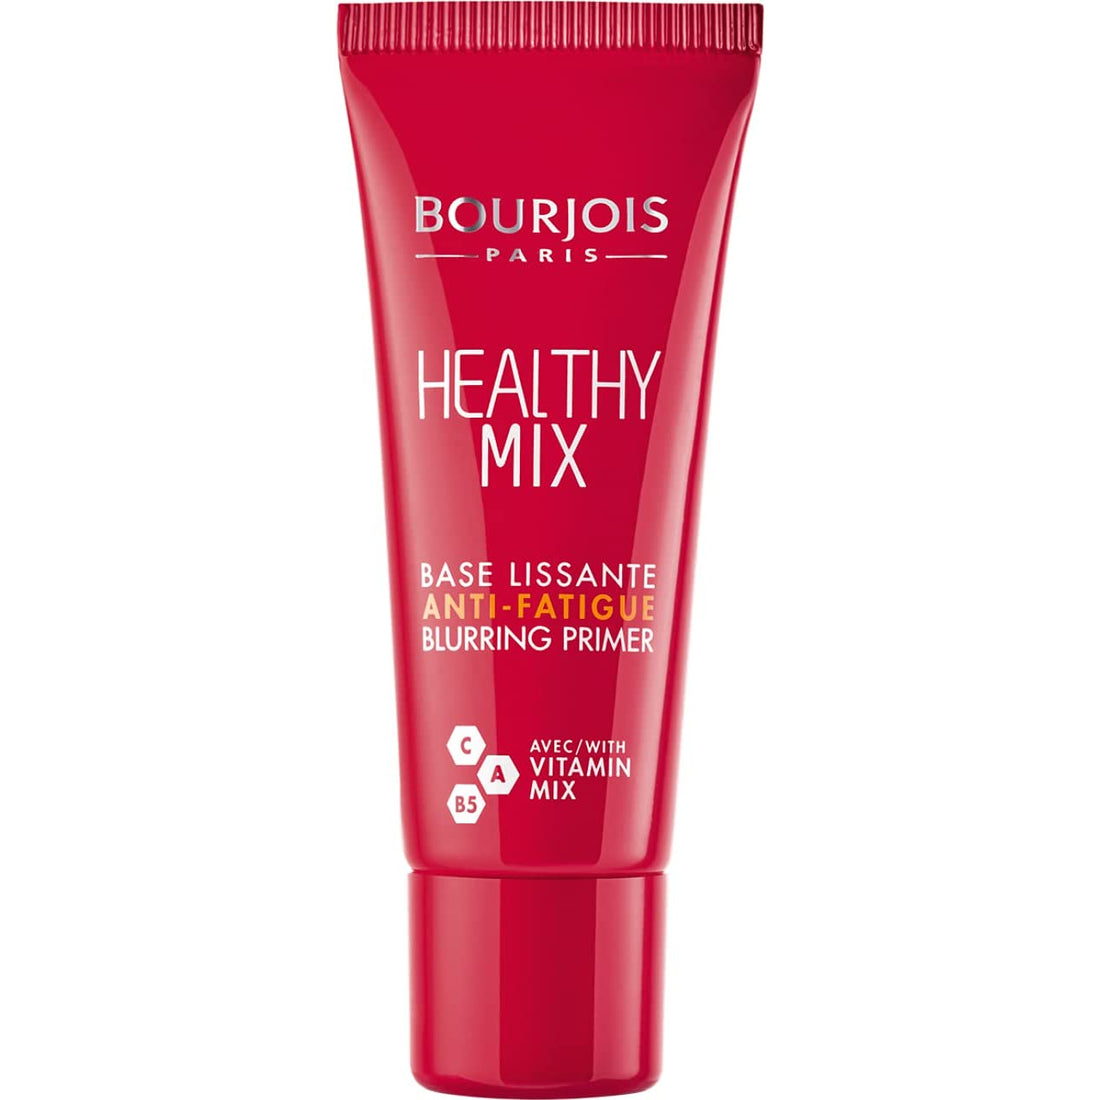 Bourjois Healthy Mix Anti-Fatigue Blurring Primer Universal Shade